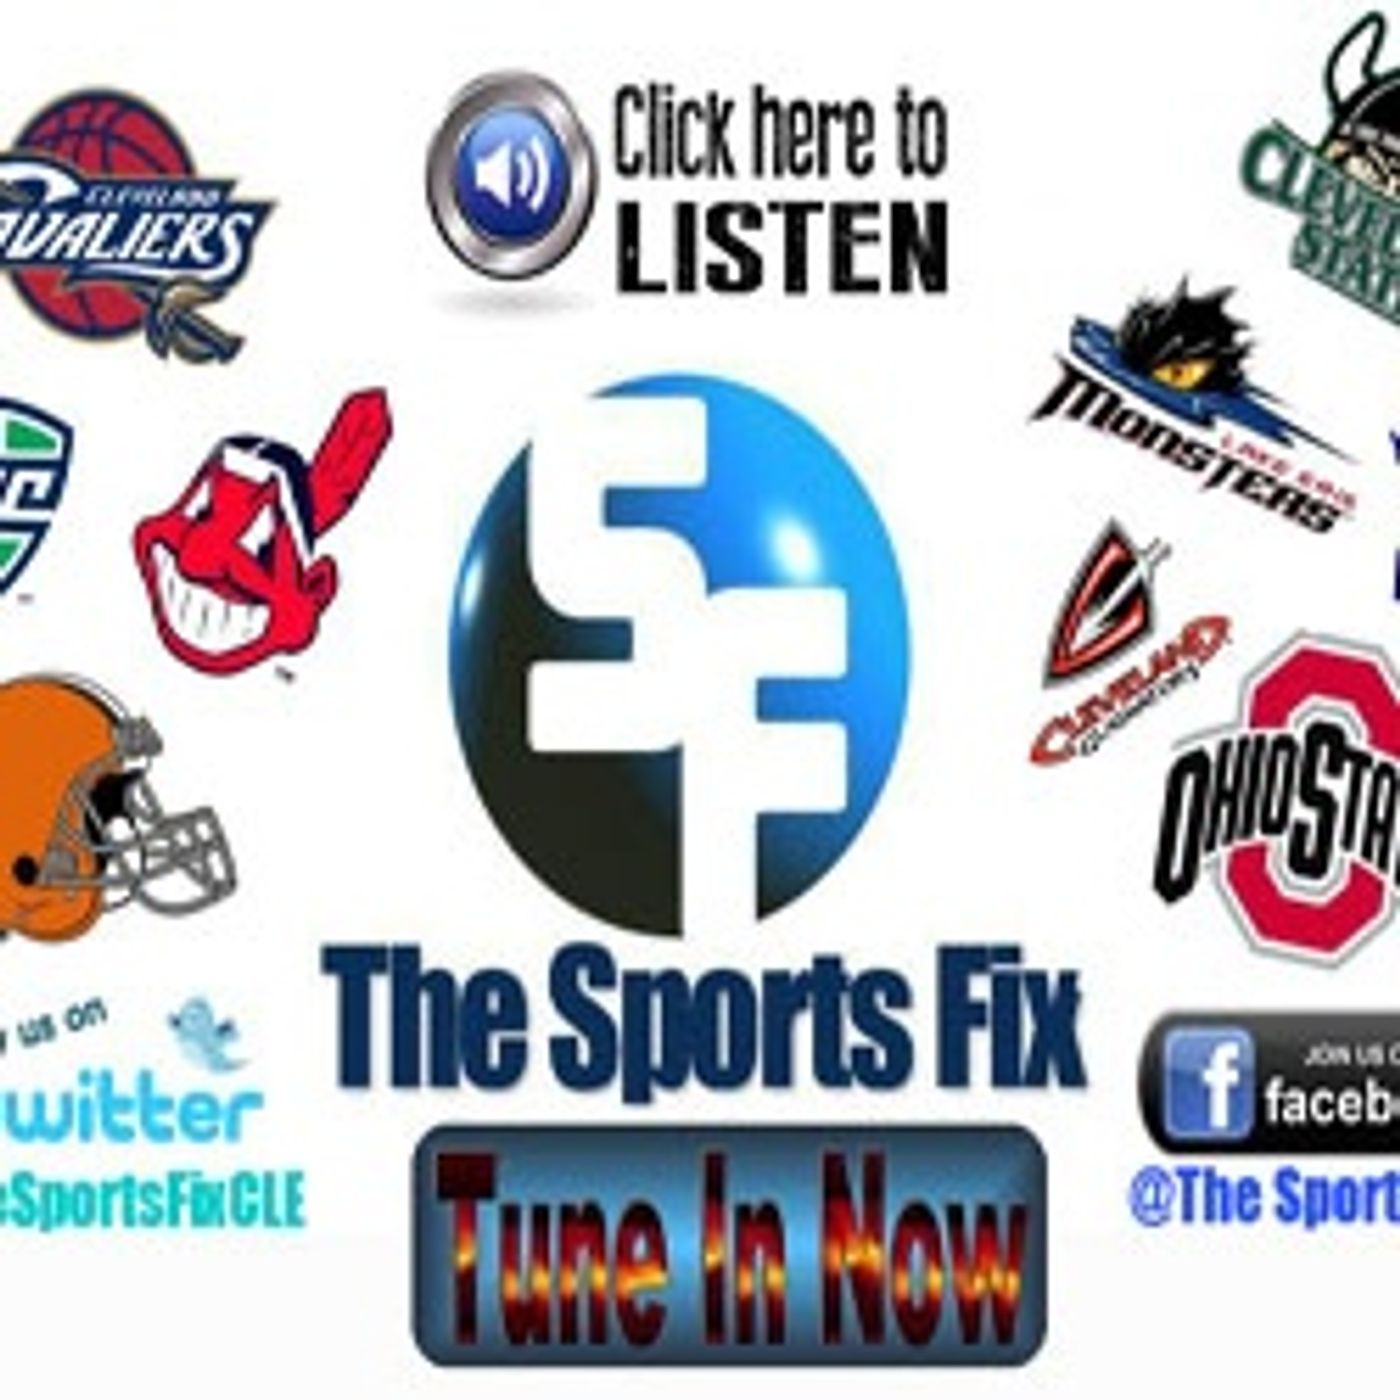 The Sports Fix - Tues Apr 7, 2015